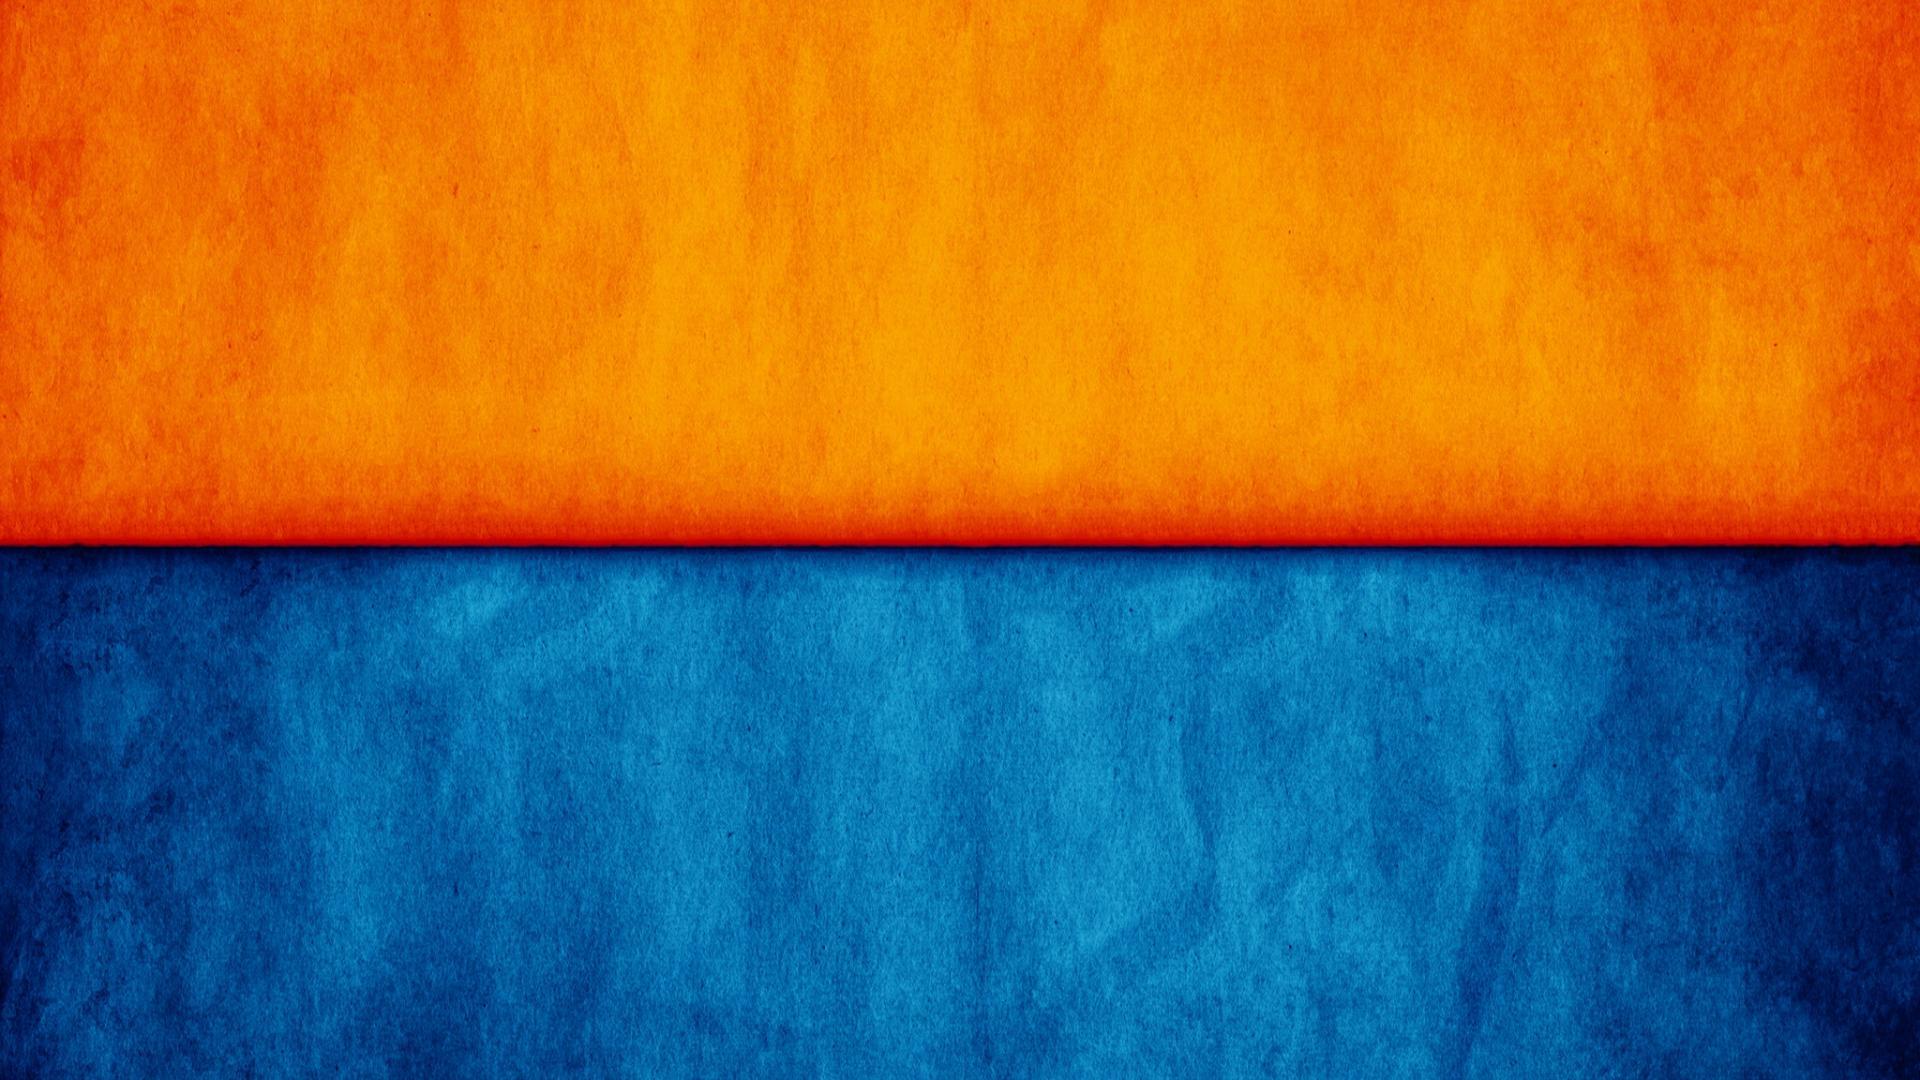 Orange Splatter iPhone Wallpaper  iDrop News